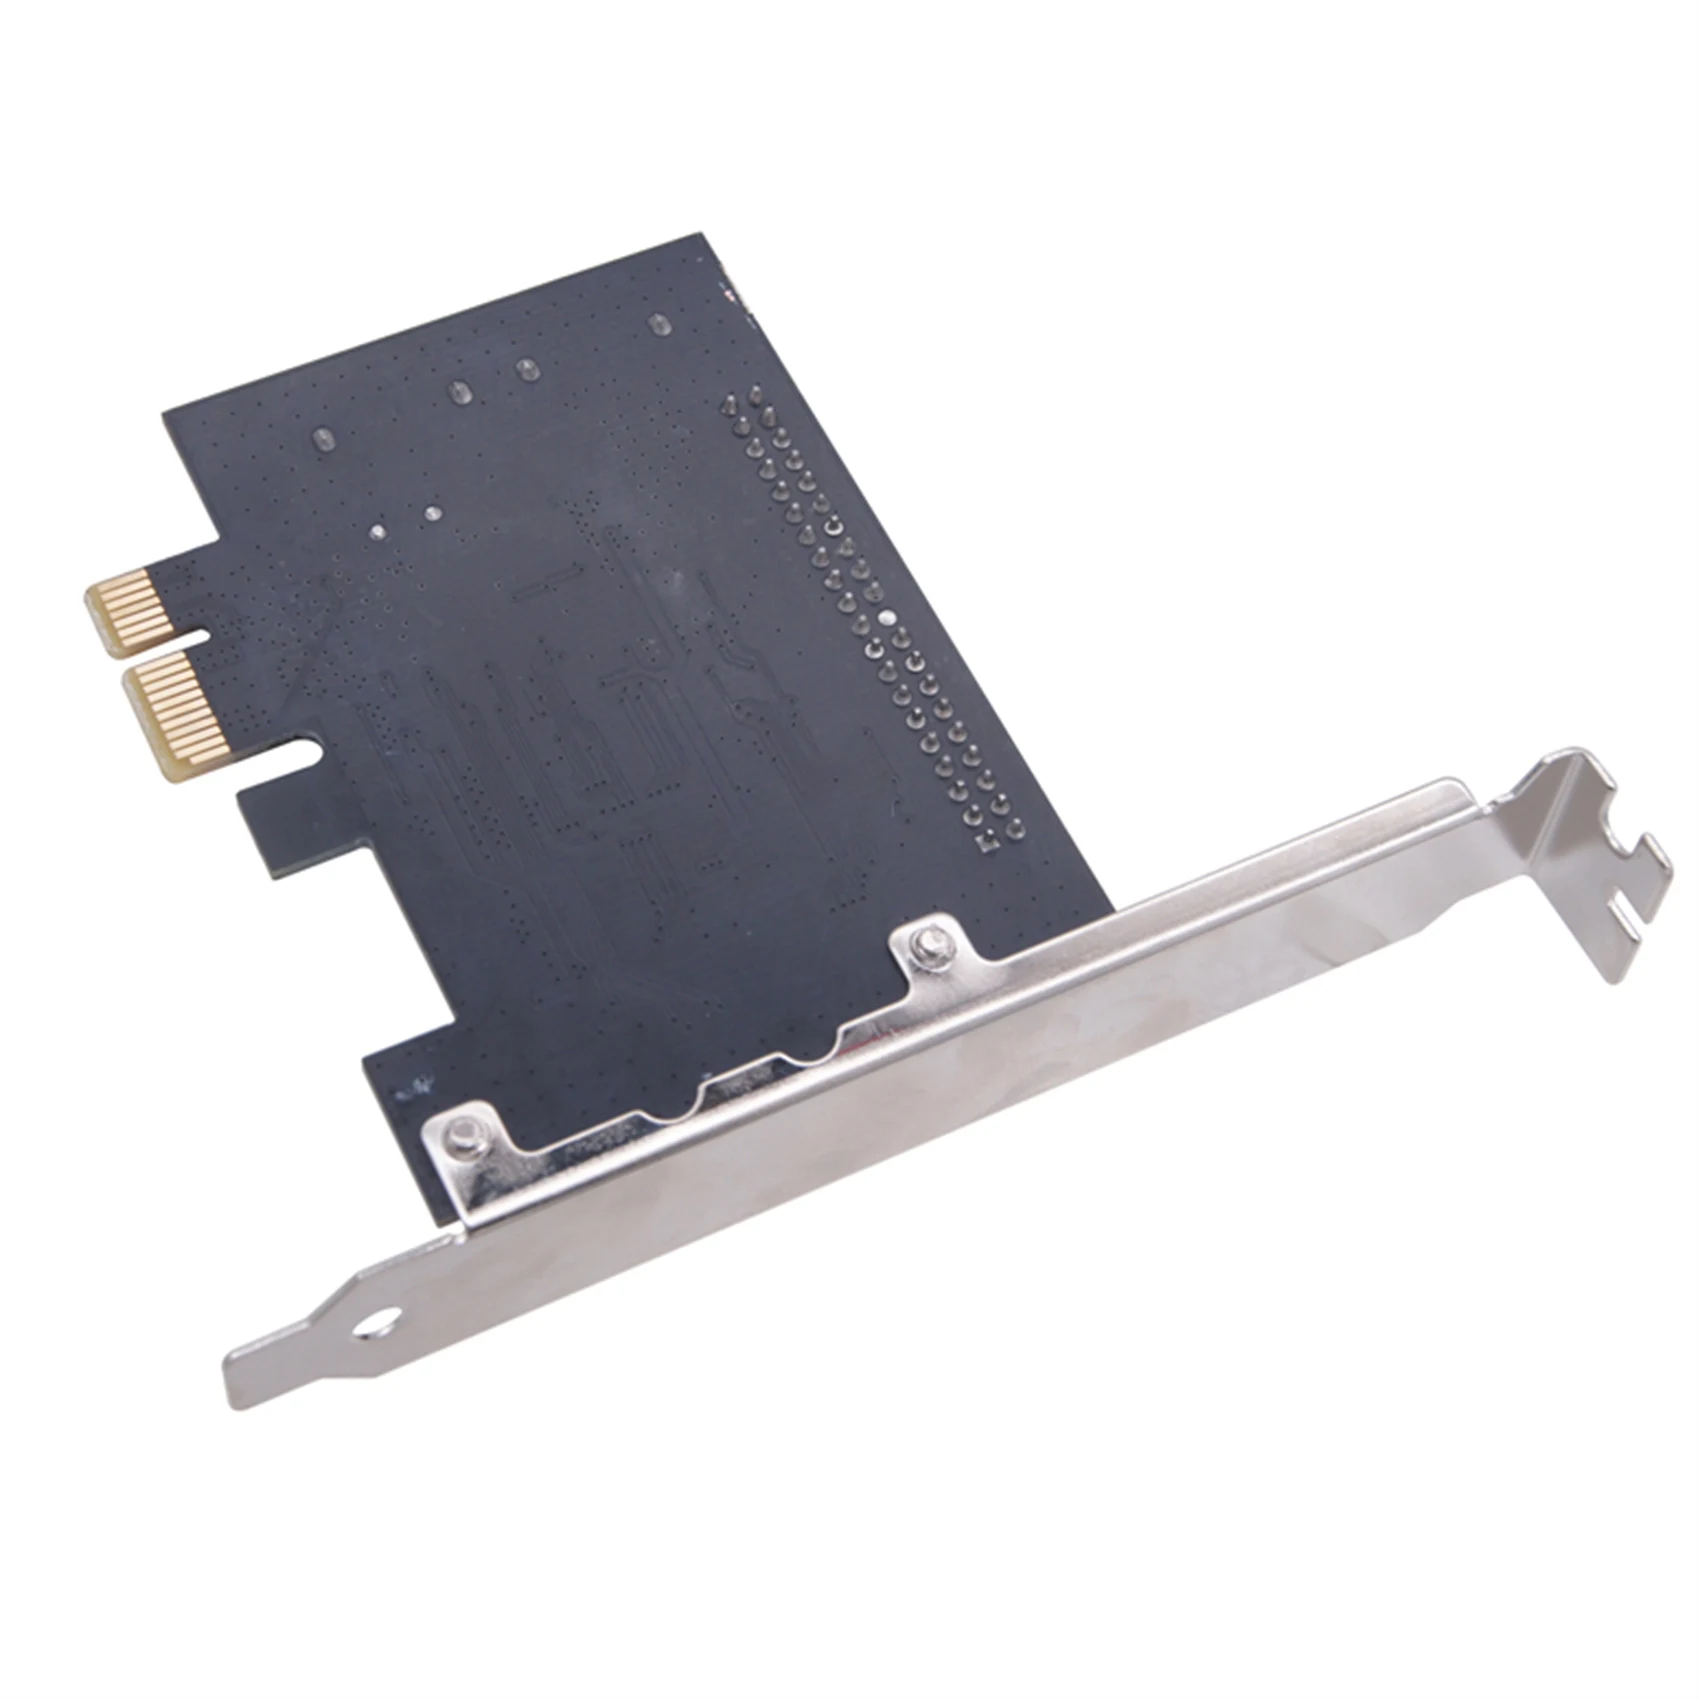 שולחן העבודה PCI-E כרטיס גרפי 2 חיבור SATA כרטיס מתאם PCI-E SATA IDE כרטיס הרחבה 3.5 אינץ IDE כרטיס מתאם